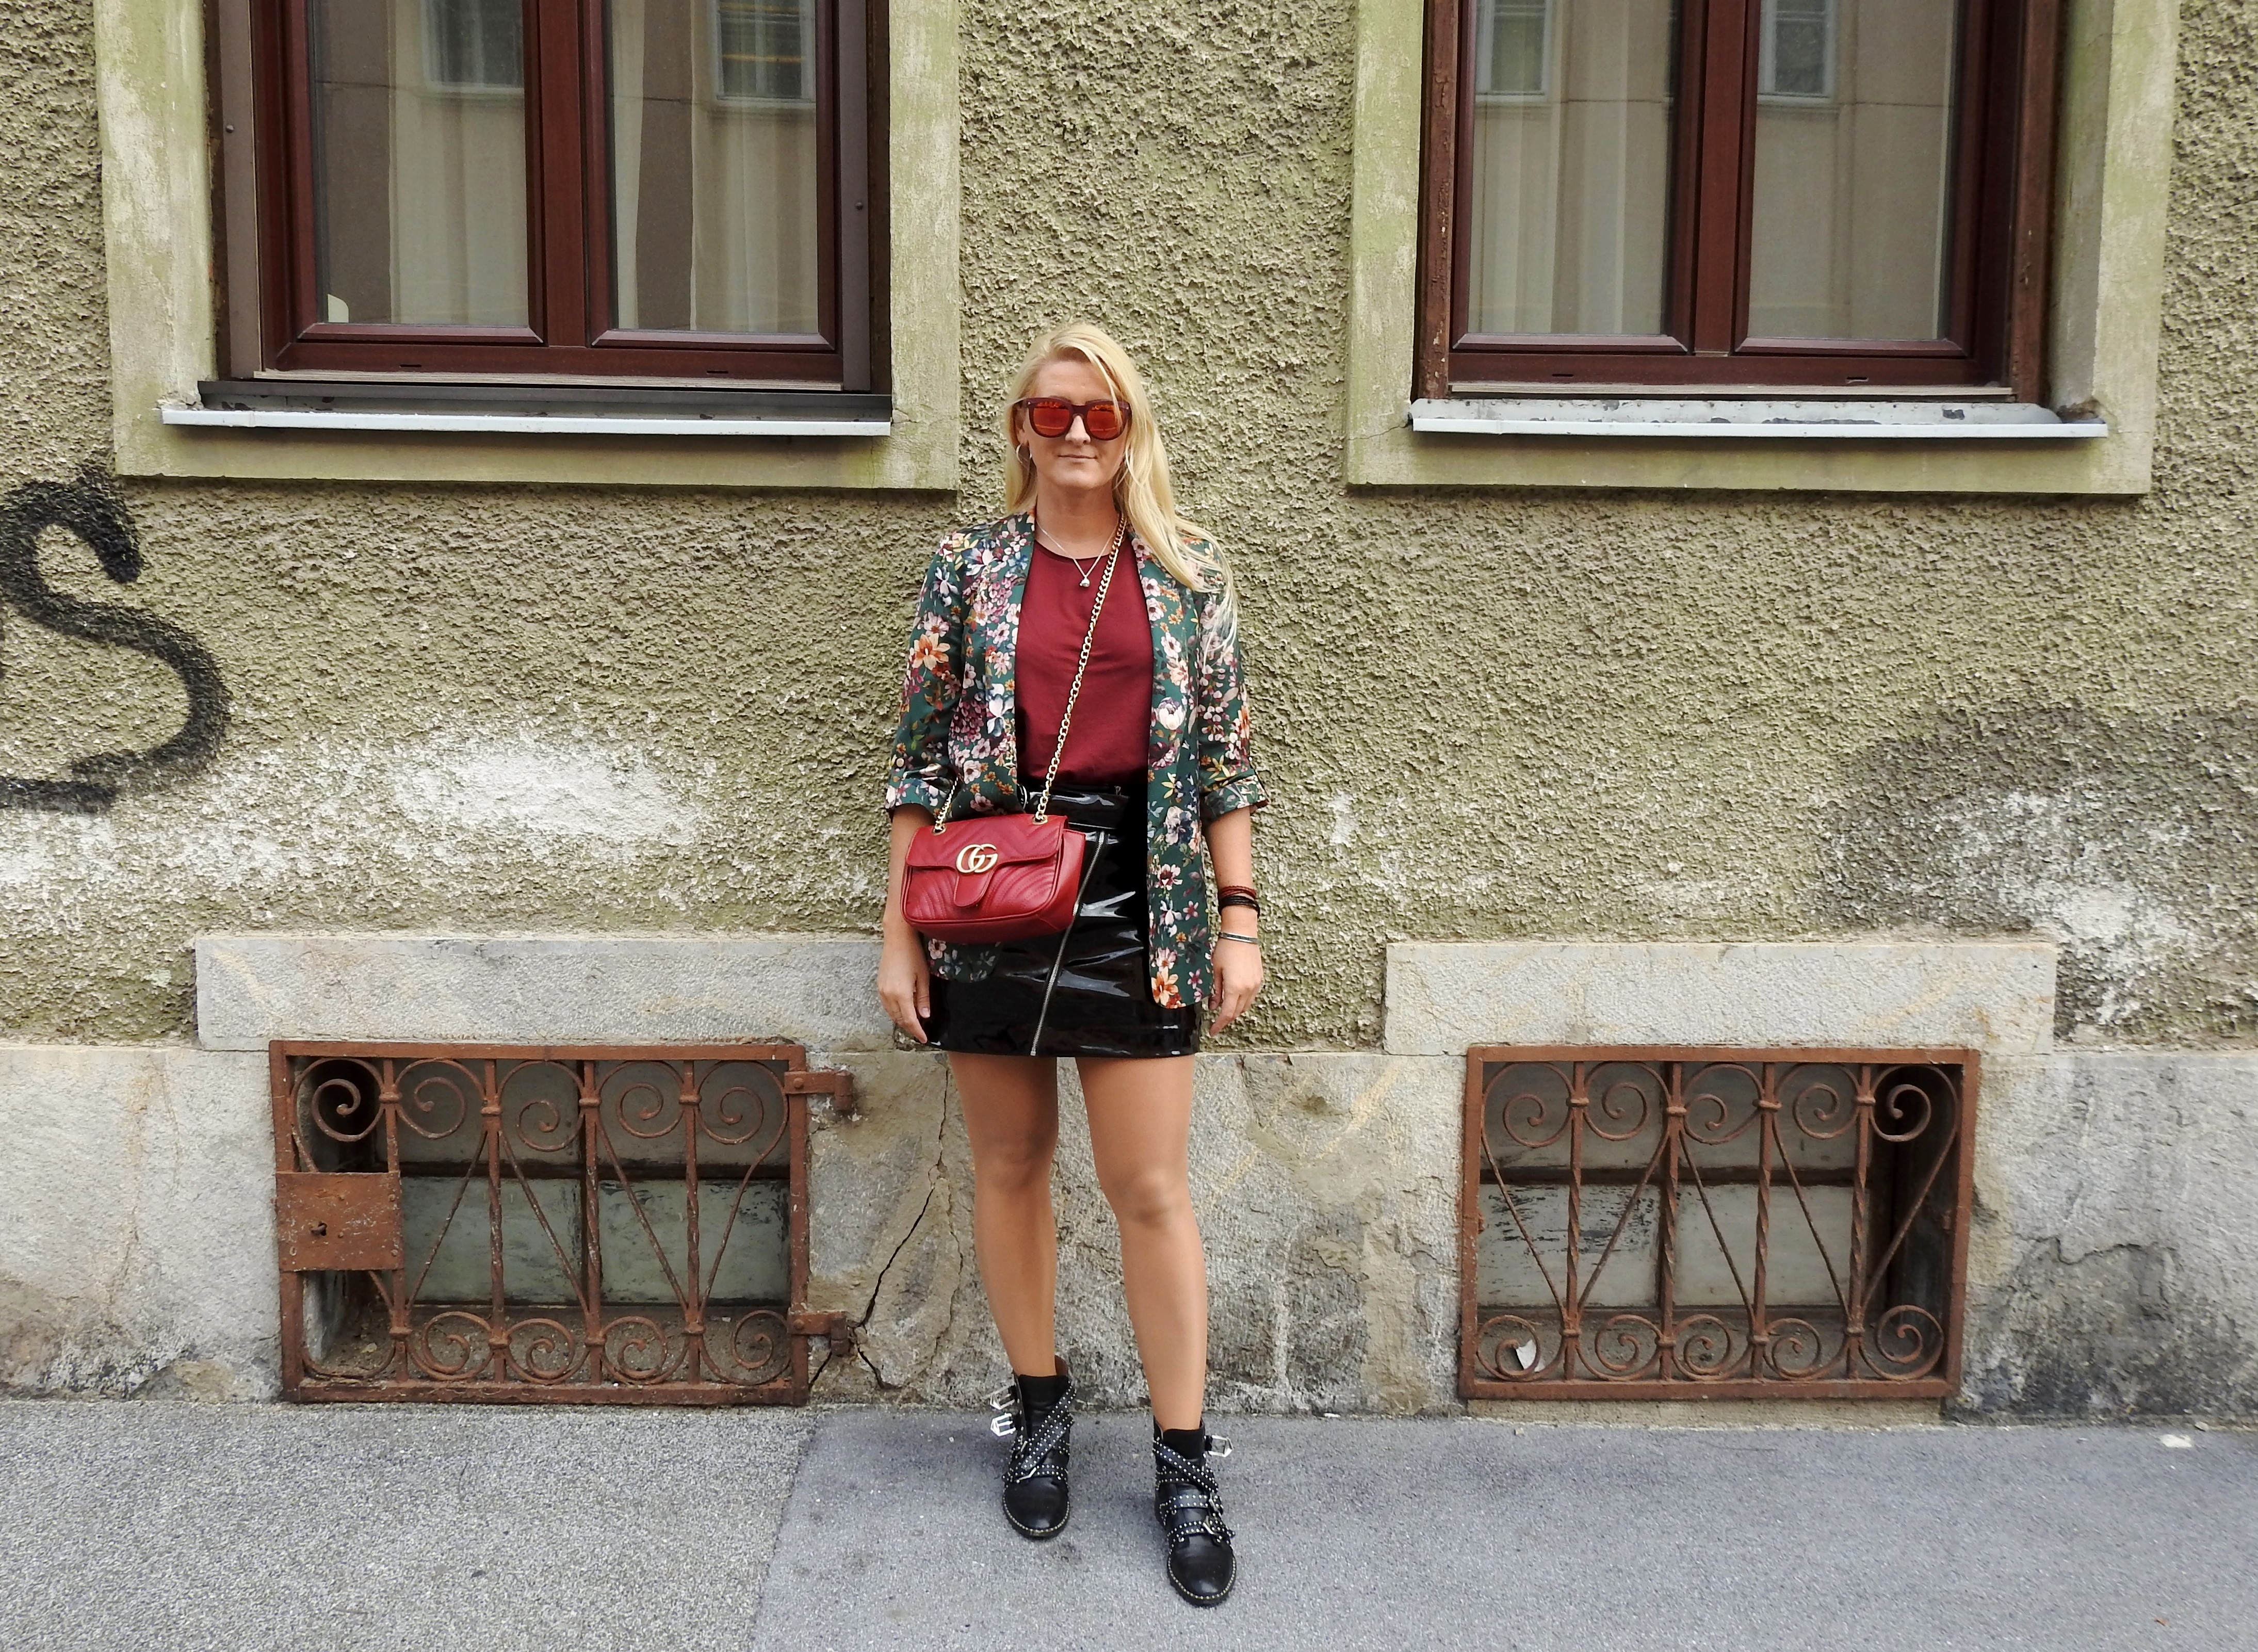 L'Occitane-Shop-Graz-Patent-Leather-Skirt-Jessica-Buurman-Boots-Studs-Gucci-Bag-Tasche-Floral-Print-Blazer-carrieslifestyle-Tamara-Prutsch